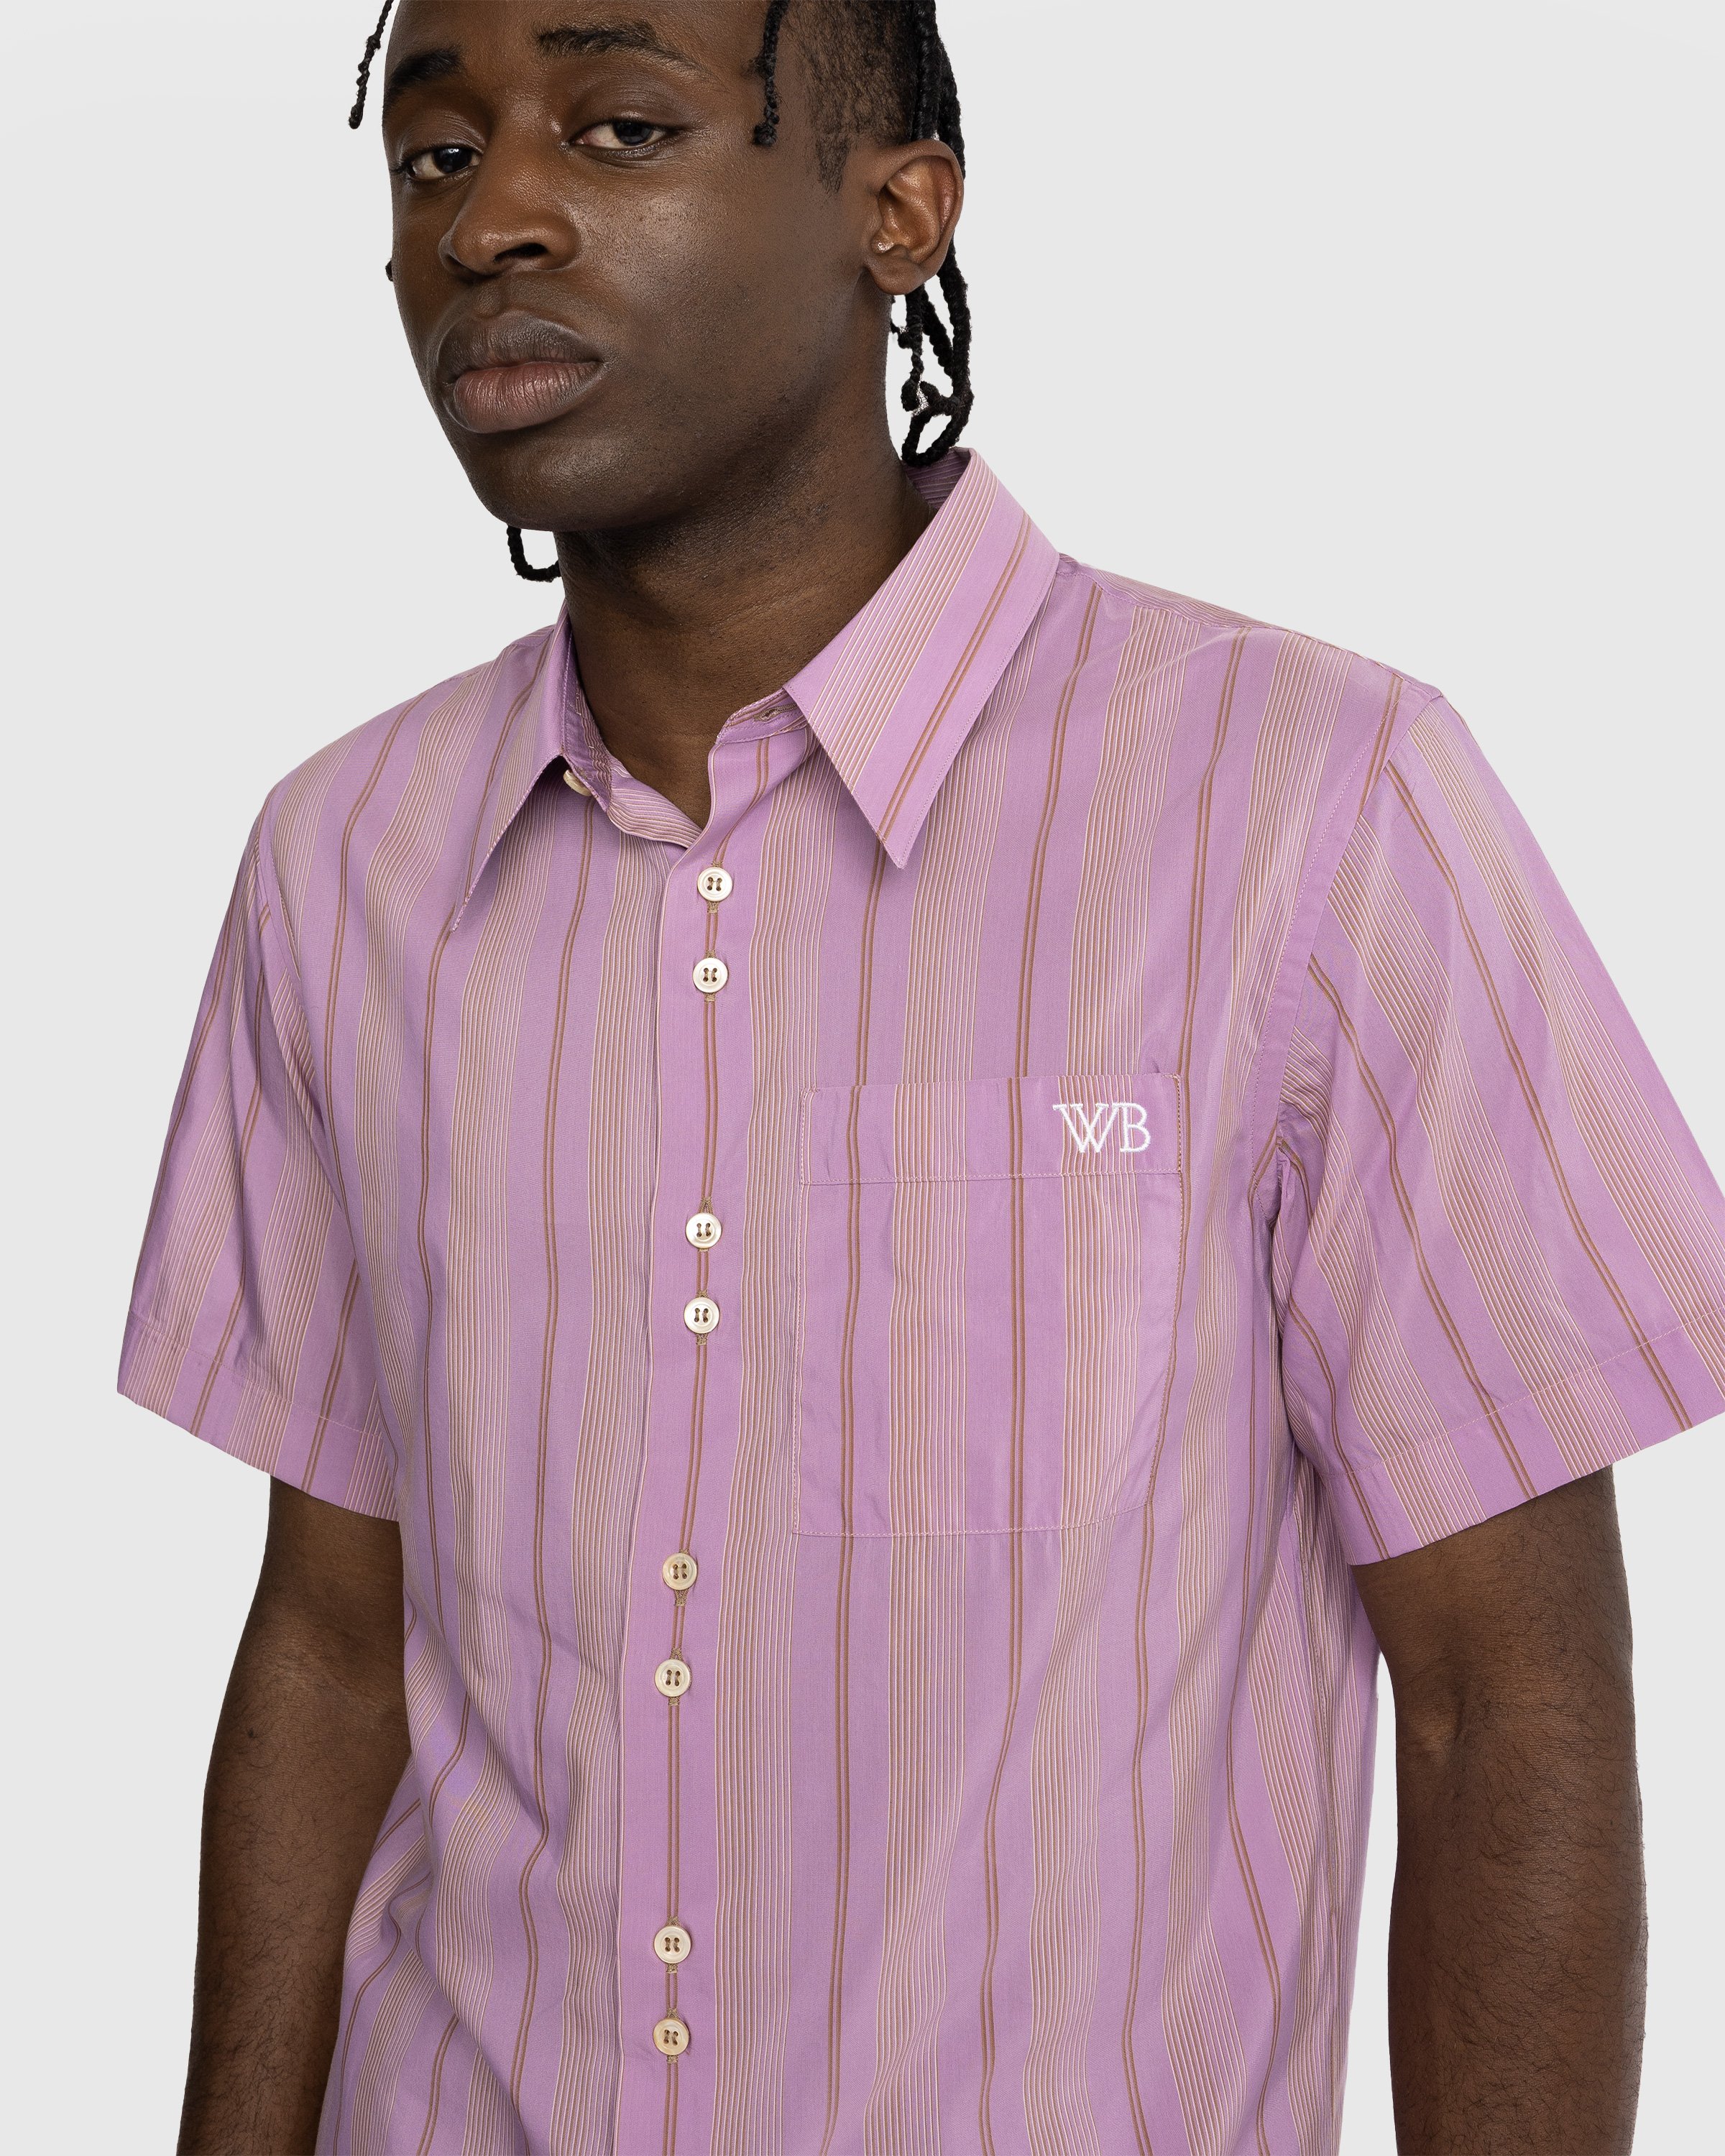 Wales Bonner - Rhythm Striped Shirt Pink - Clothing - Pink - Image 5